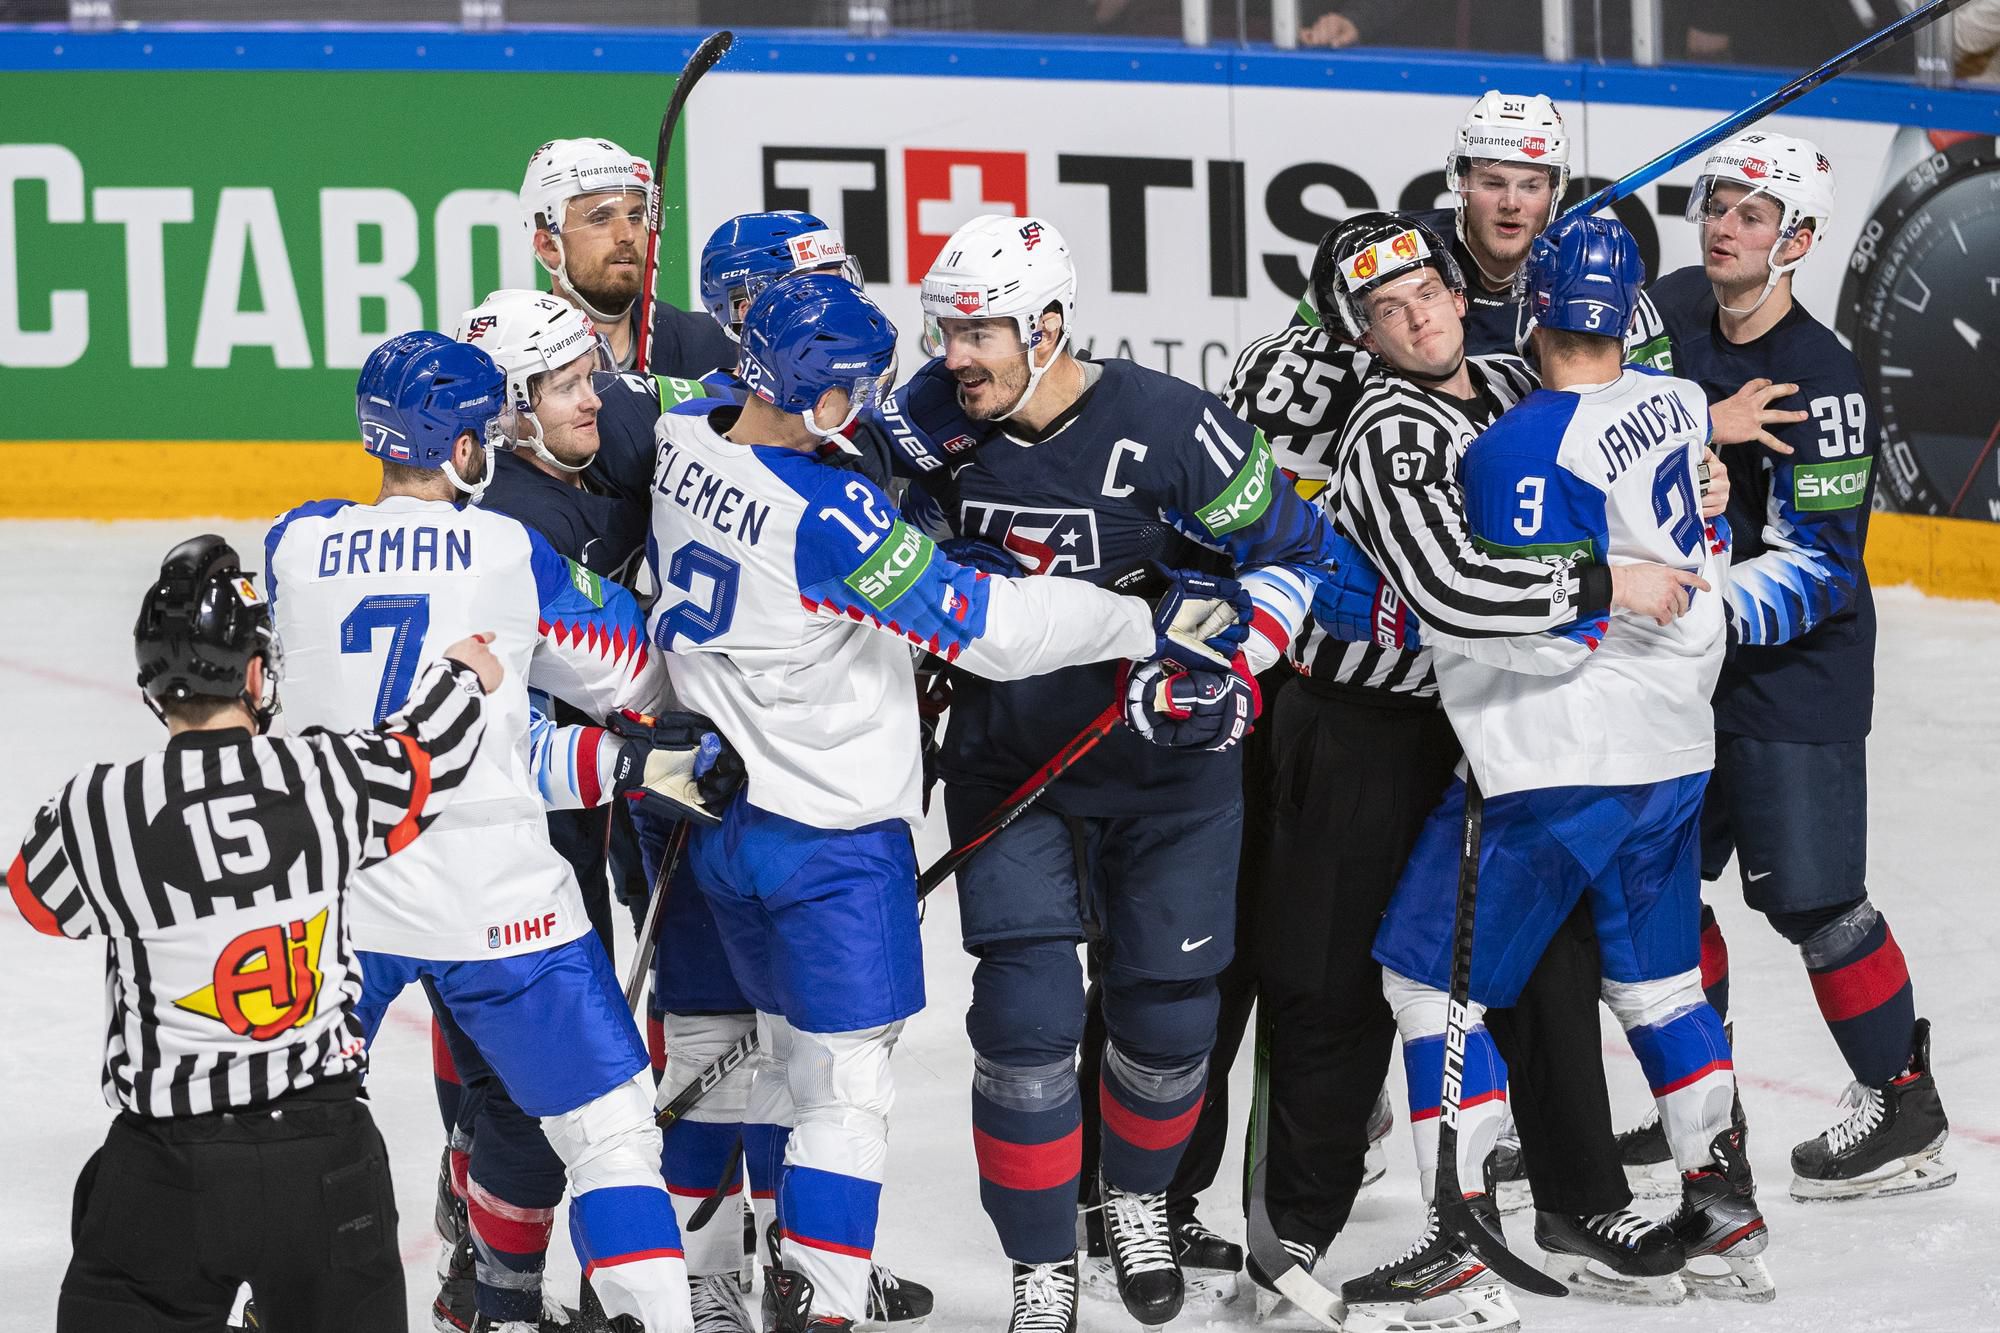 MS v hokeji 2021: USA - Slovensko: uprostred vľavo Miloš Kelemen (Slovensko) a uprostred vpravo kapitán Brian Boyle (USA)